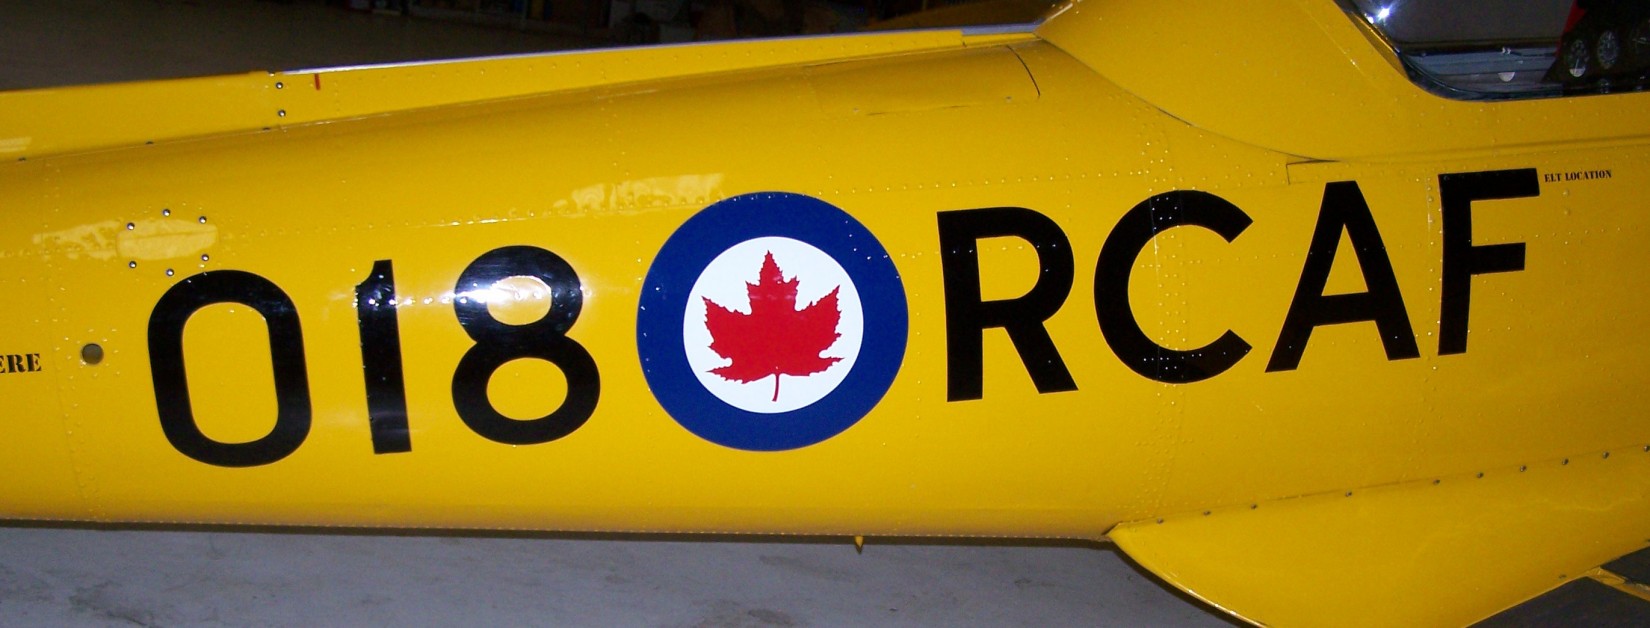 Royal Canadian Air Force font